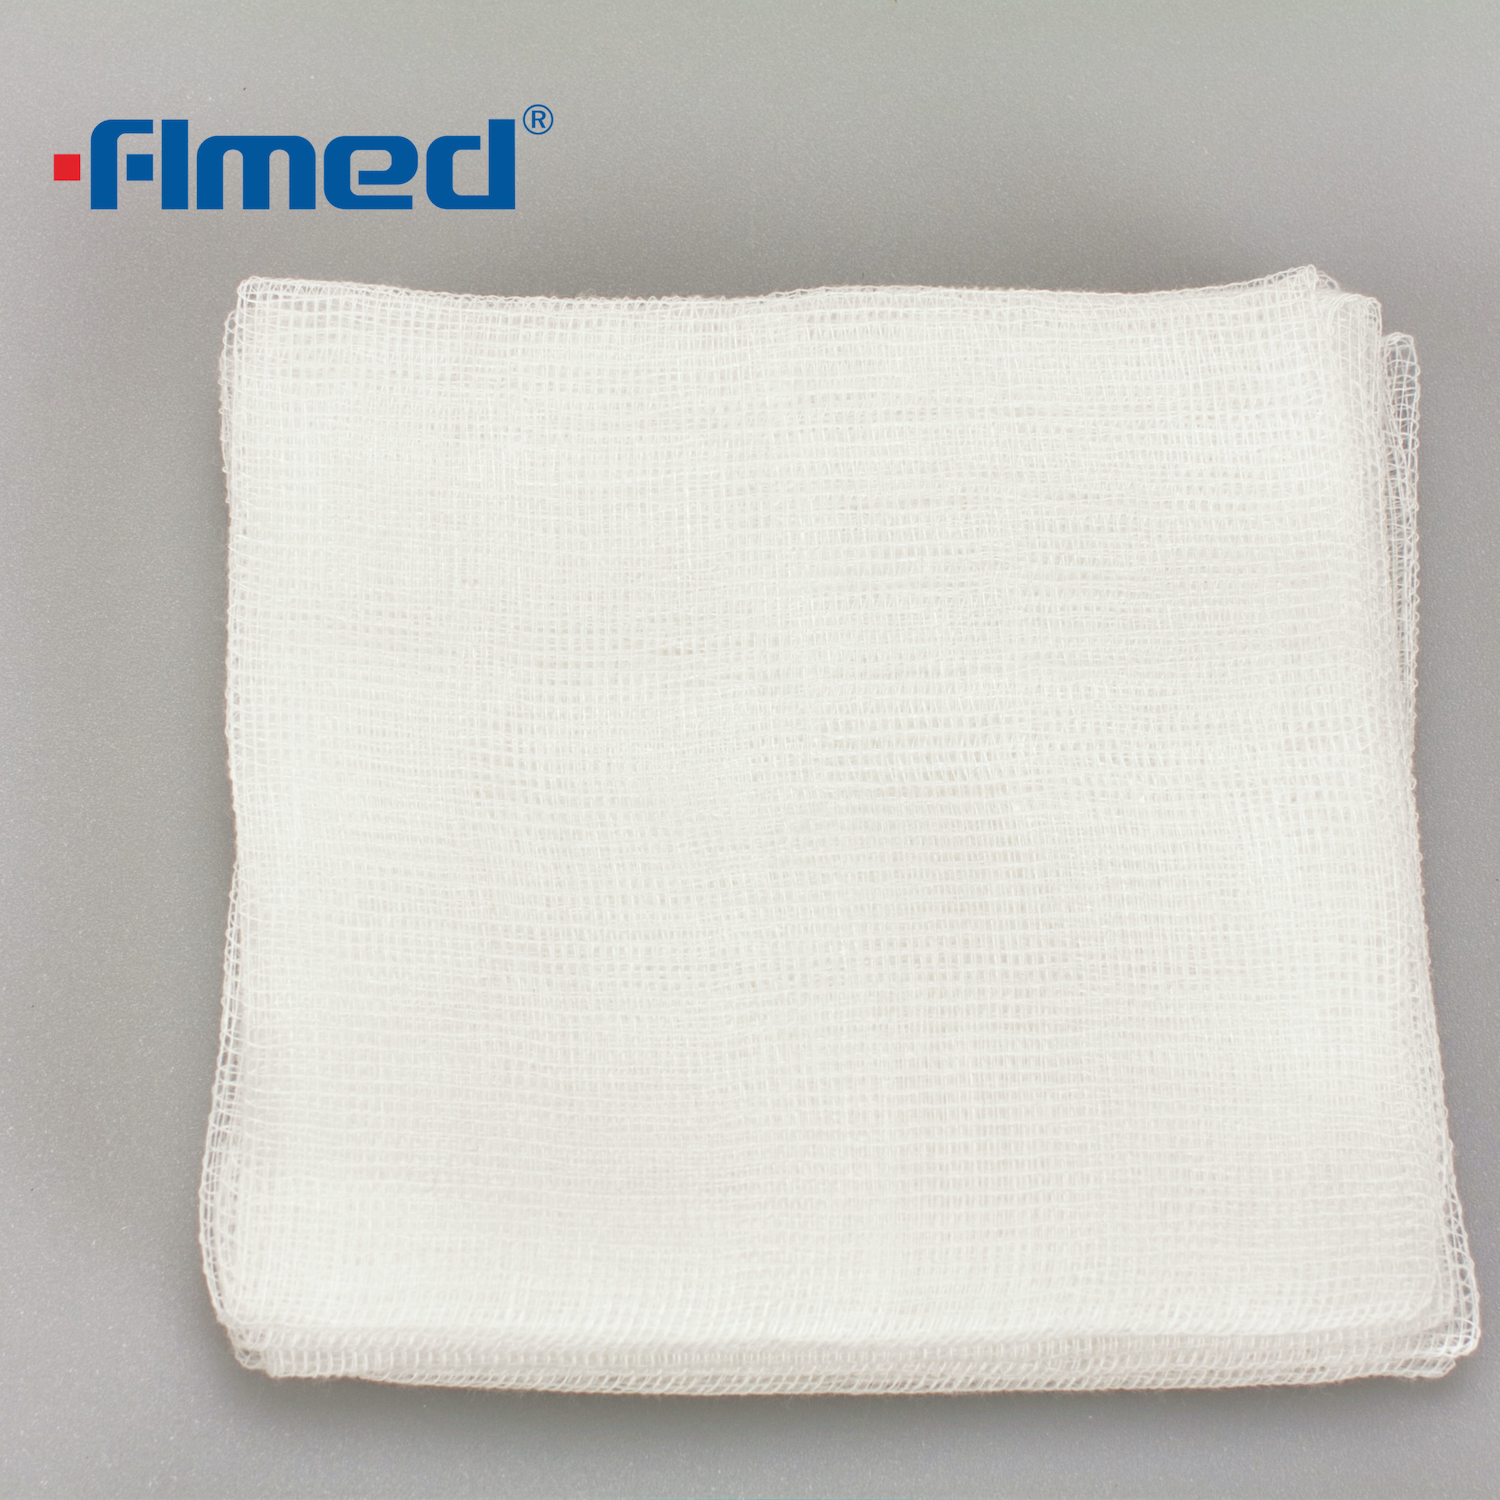 Medical Absorbent Cotton Gauze Swab (Sterilized / Non-Sterile) 